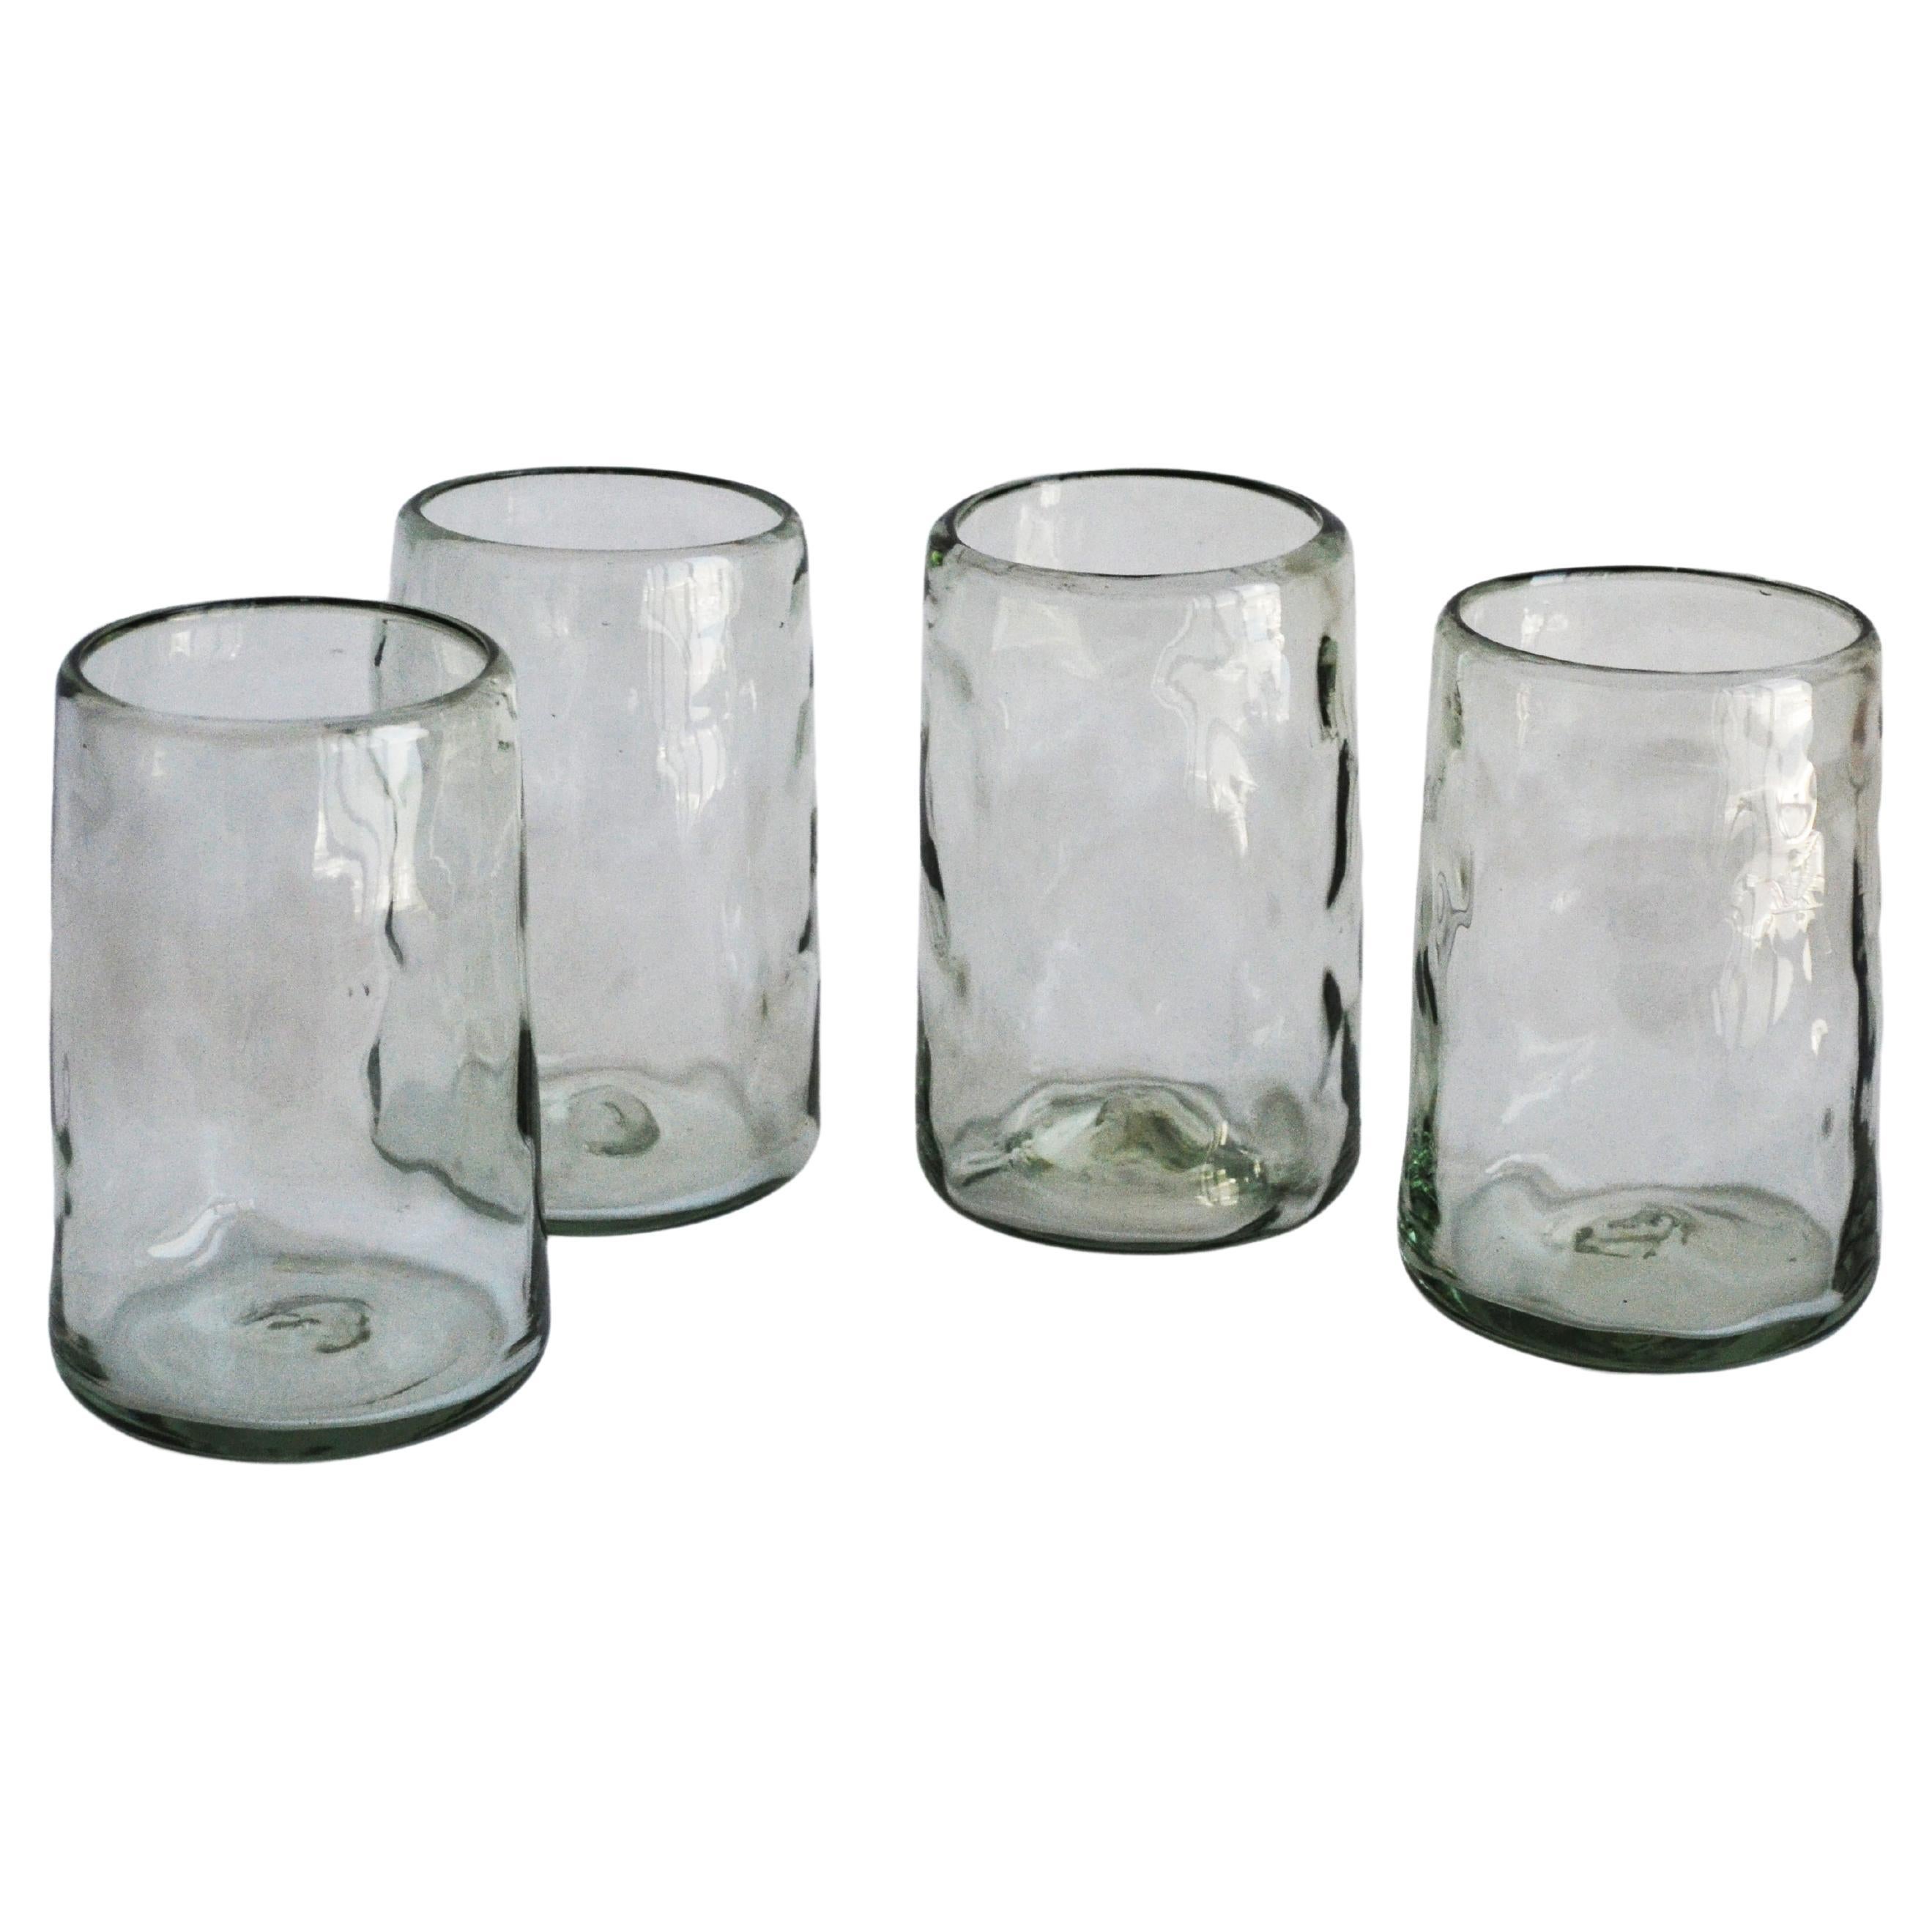 https://a.1stdibscdn.com/4-beer-cocktail-glasses-handblown-organic-irregular-shape-100-recycled-glass-for-sale/f_60172/f_274666821645403074779/f_27466682_1645403075838_bg_processed.jpg